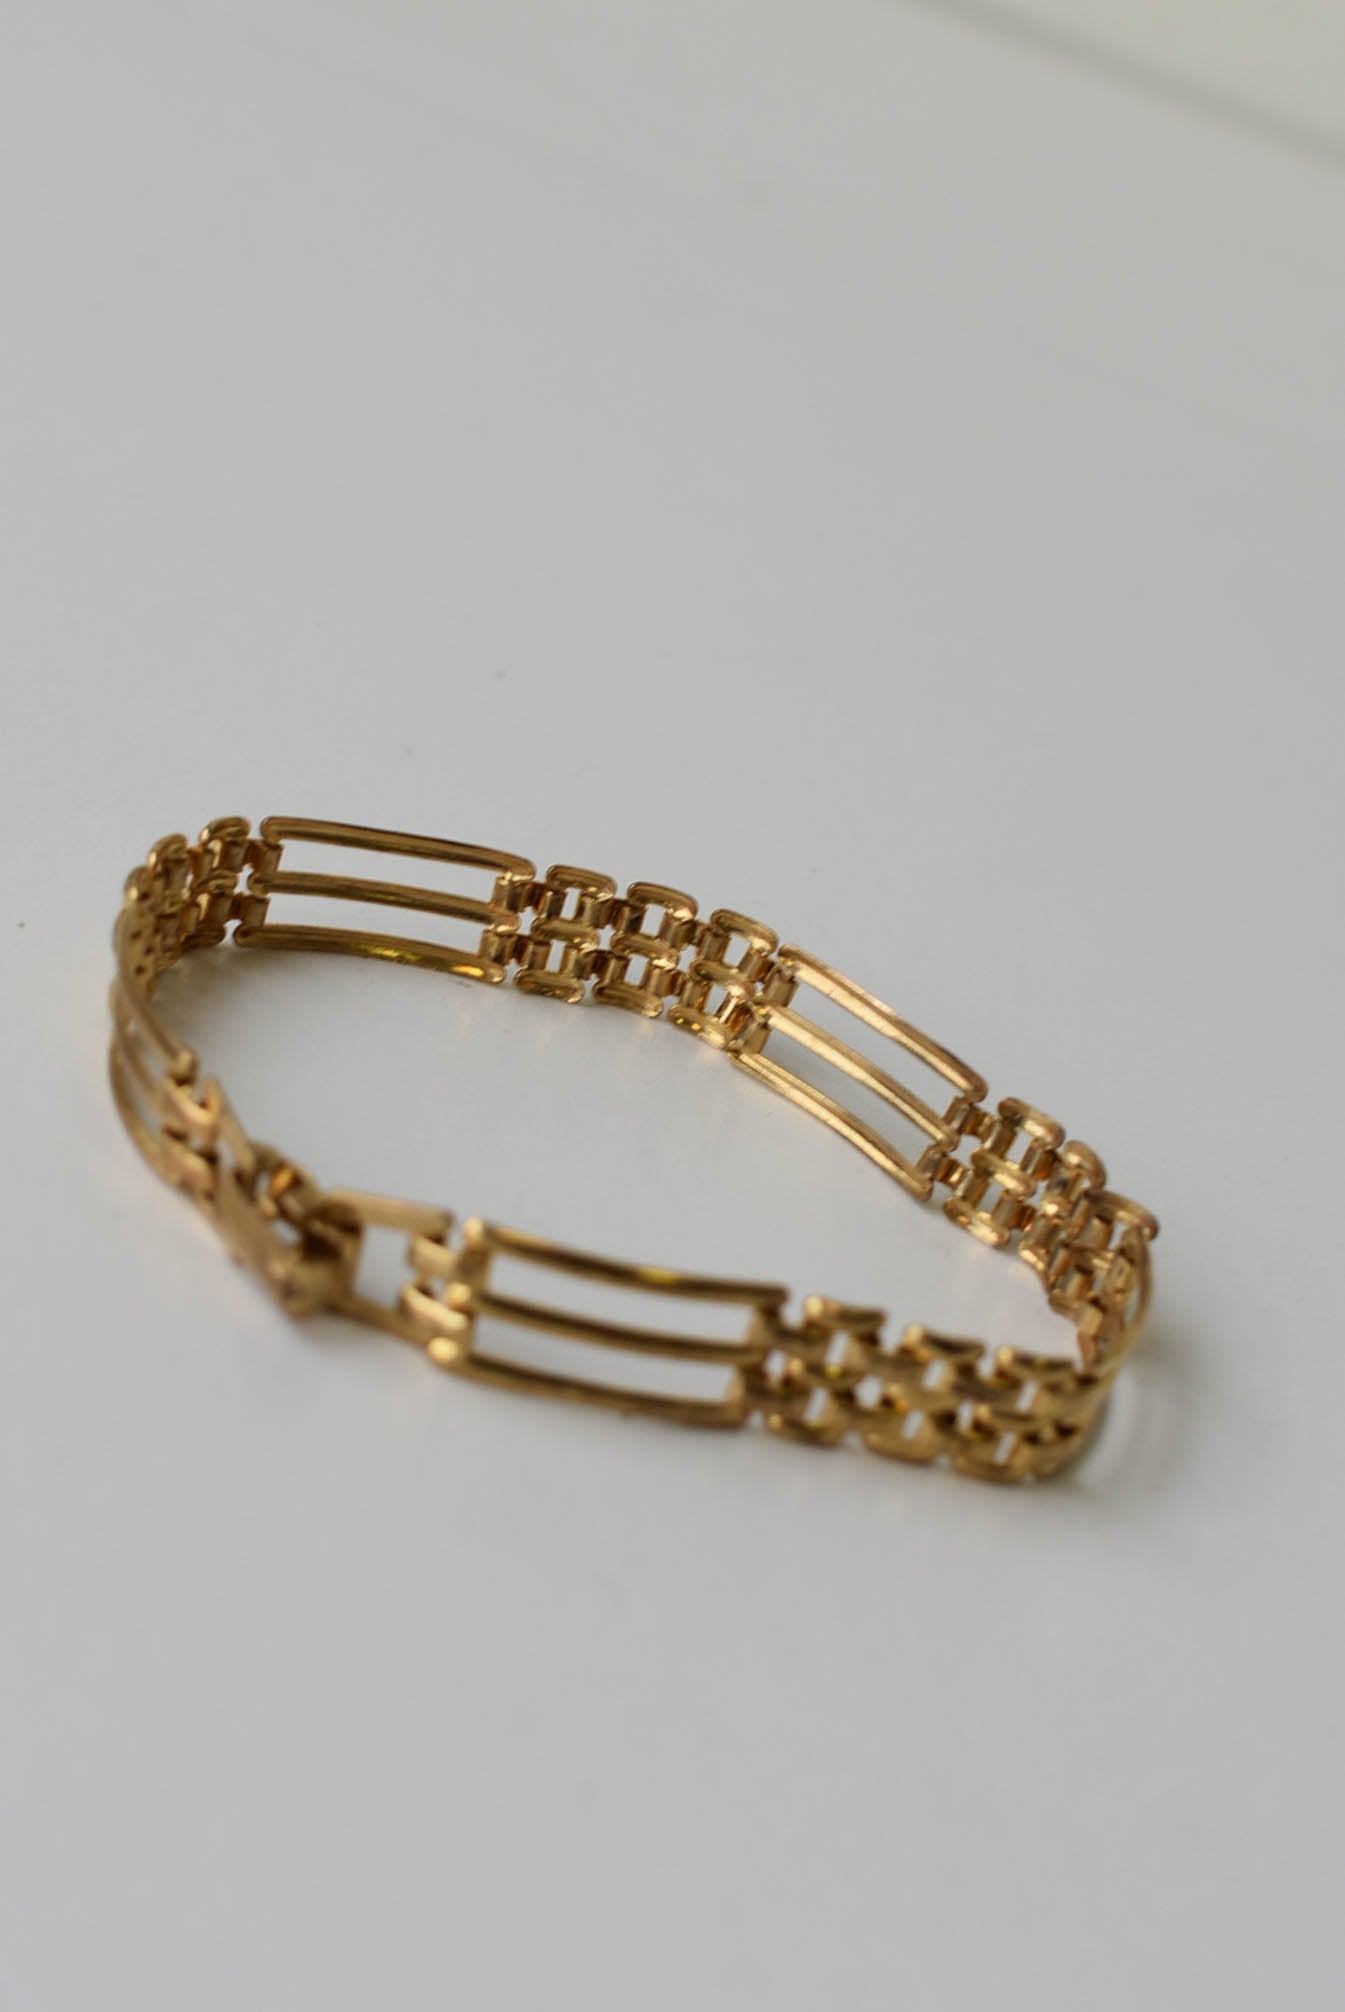 Retro gold tone bracelet